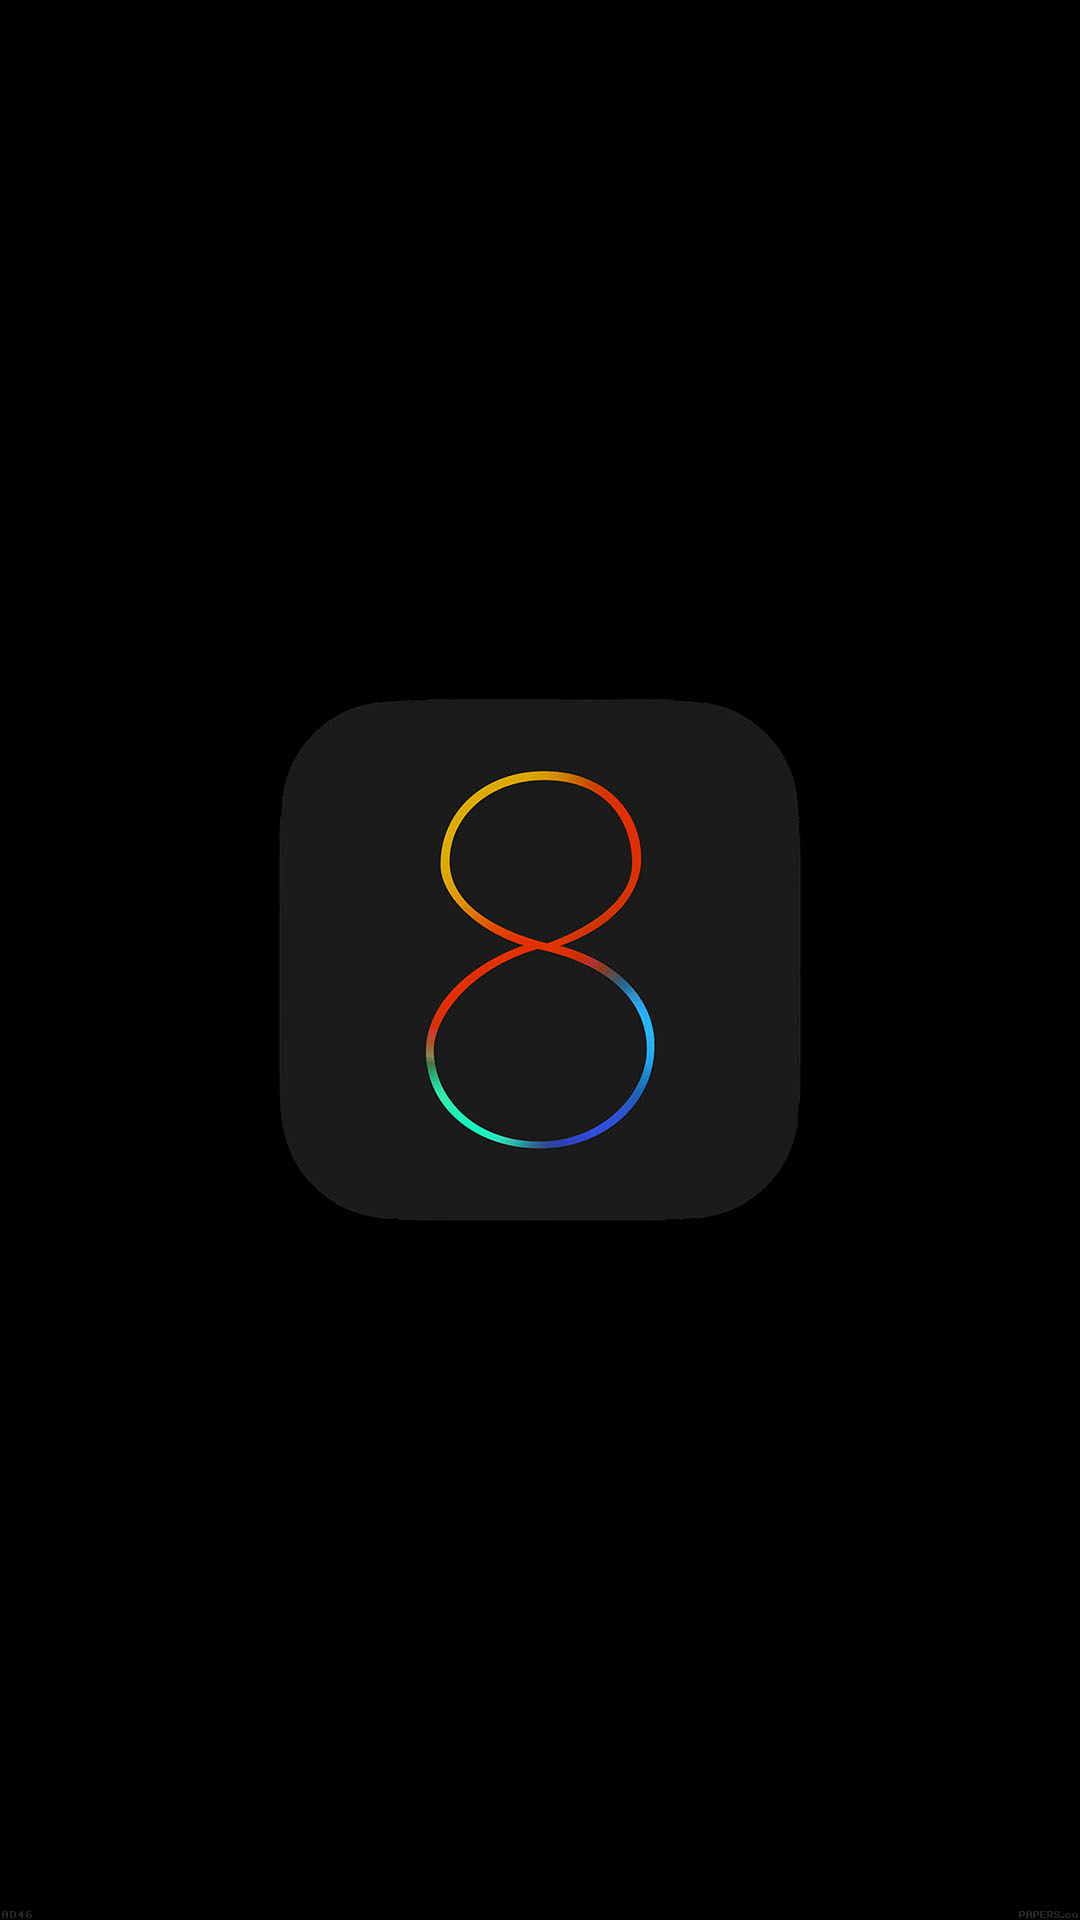 Apple IOS8 Dark Logo Android wallpaper